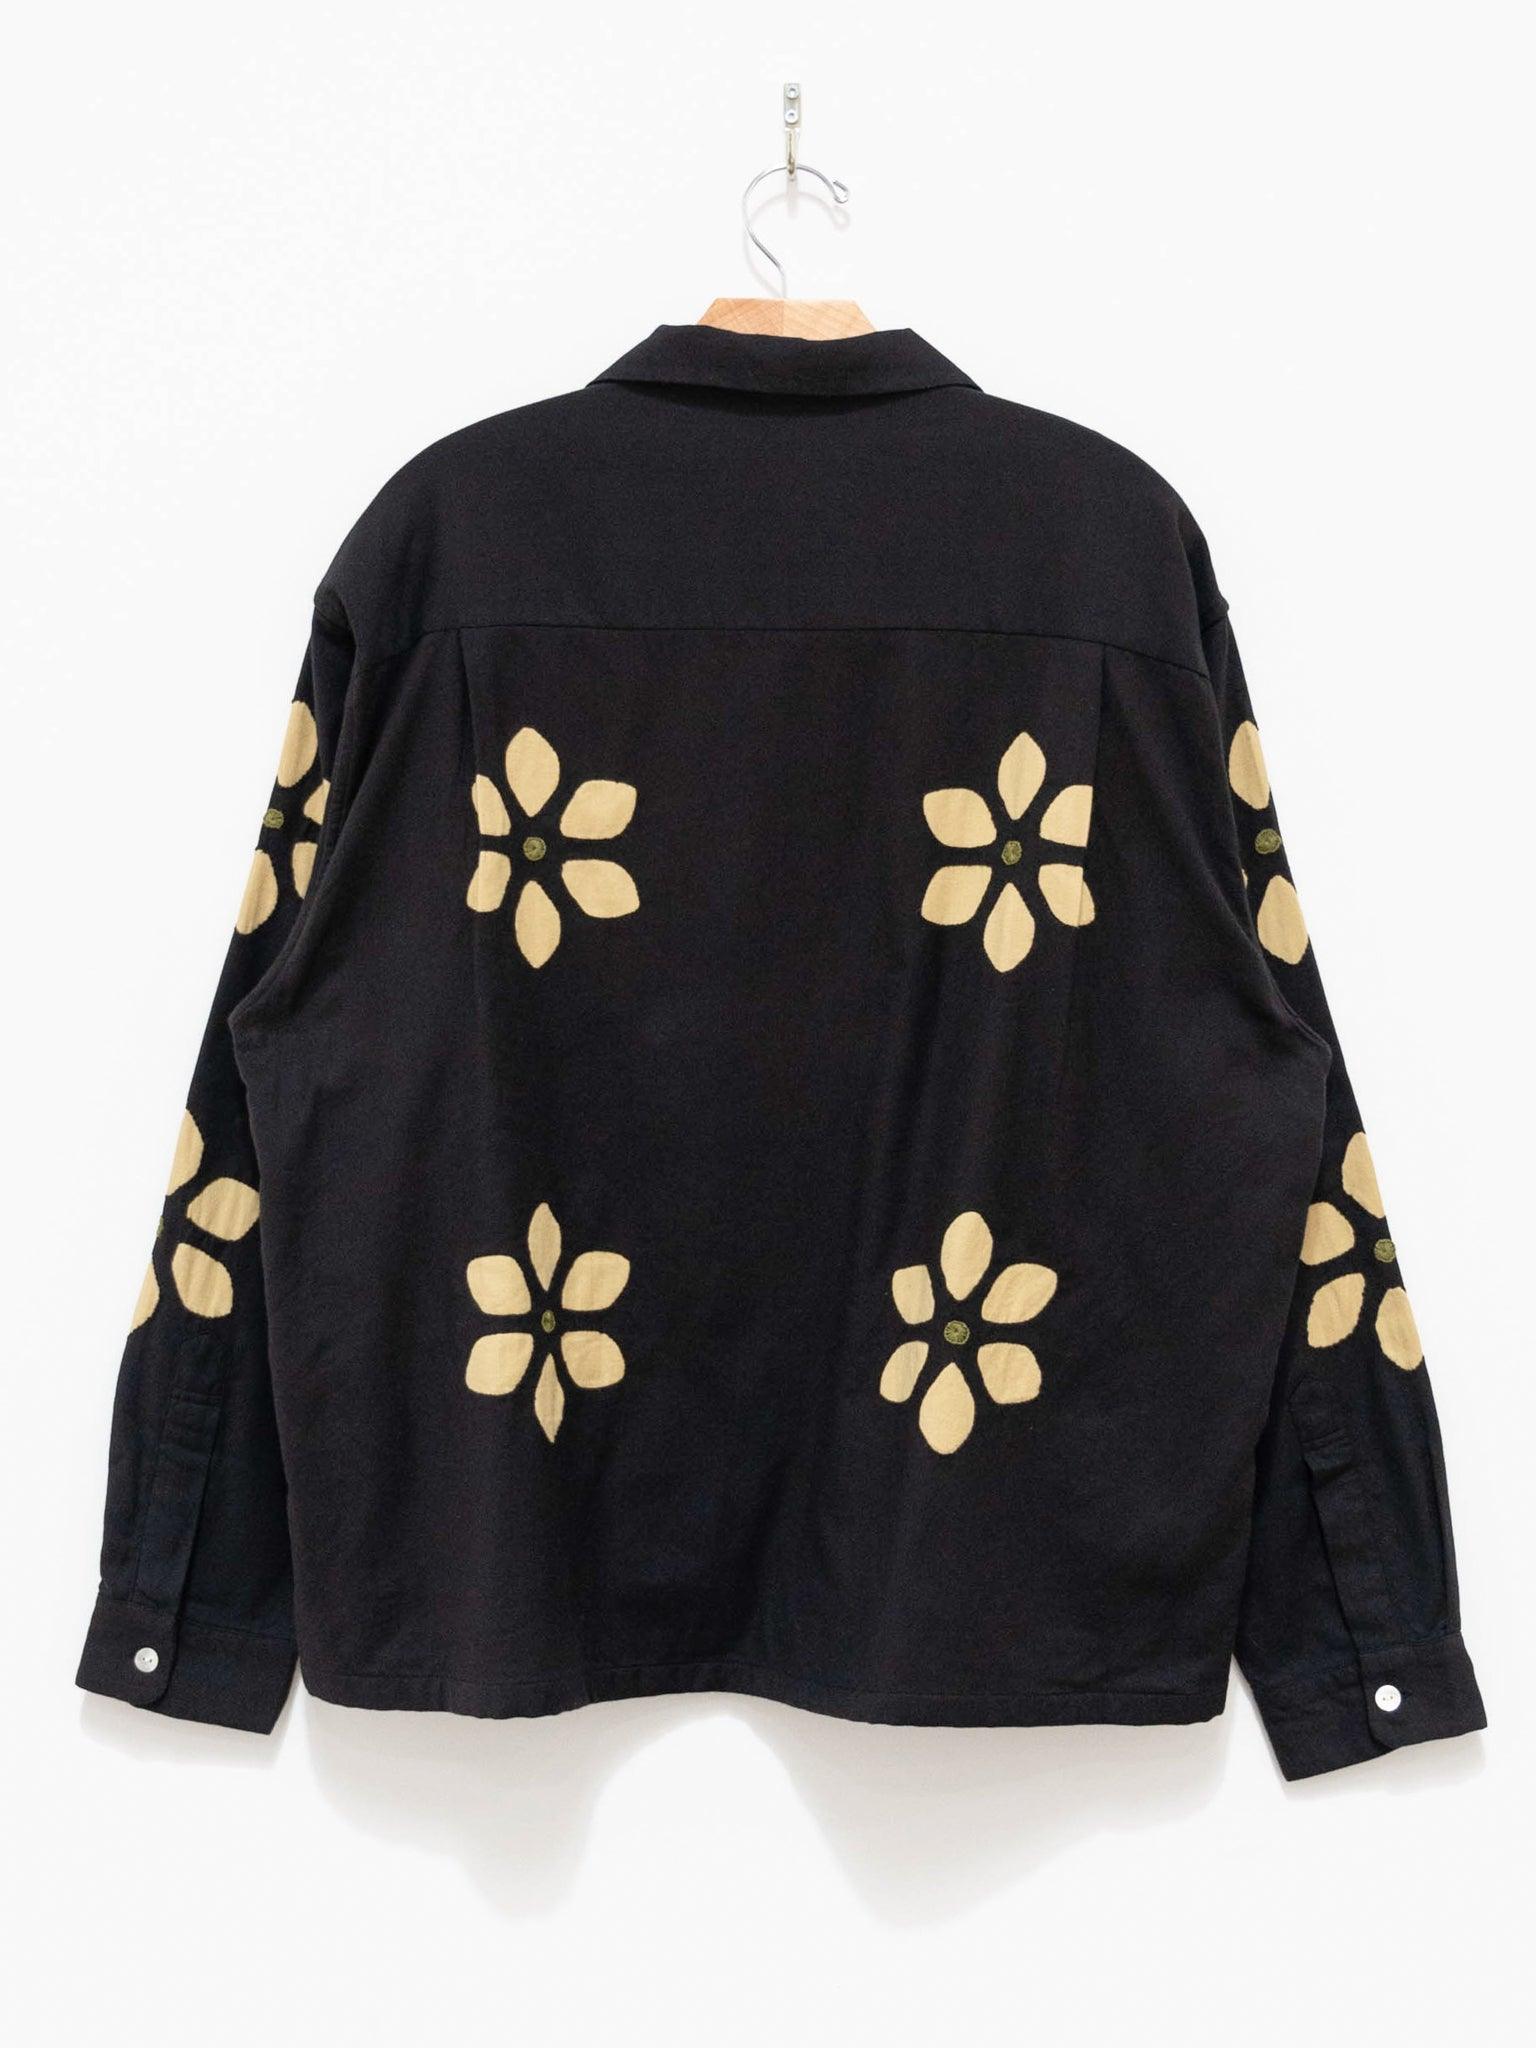 Namu Shop - Niche Twill Flower Cut Work Open Collar Shirt - Black